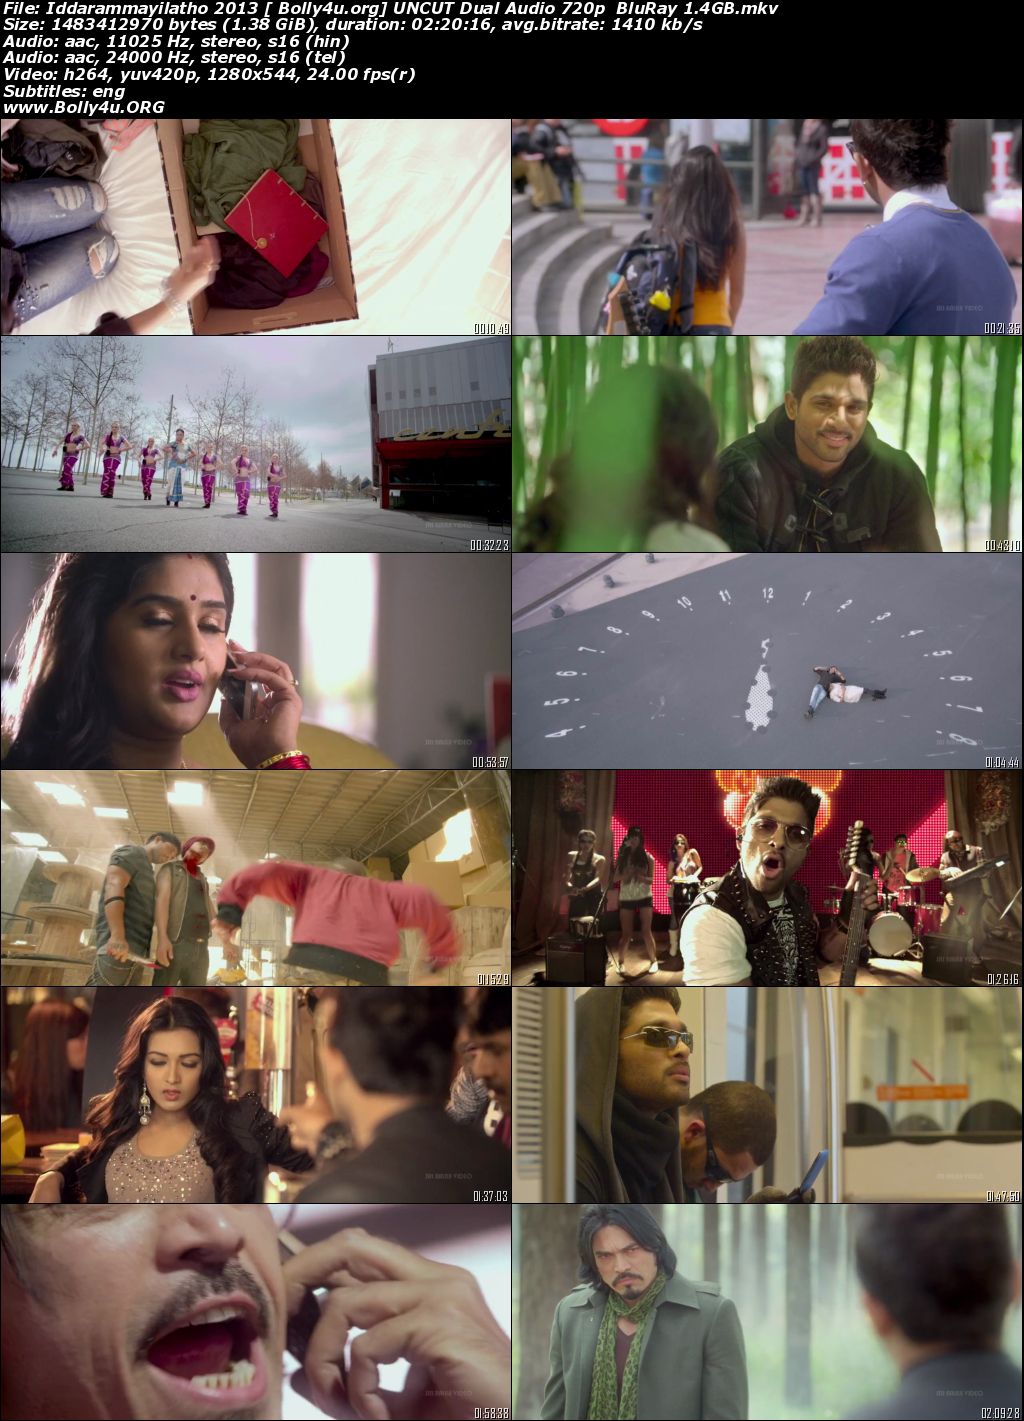 Iddarammayilatho 2013 BluRay UNCUT Hindi Dual Audio 720p Download